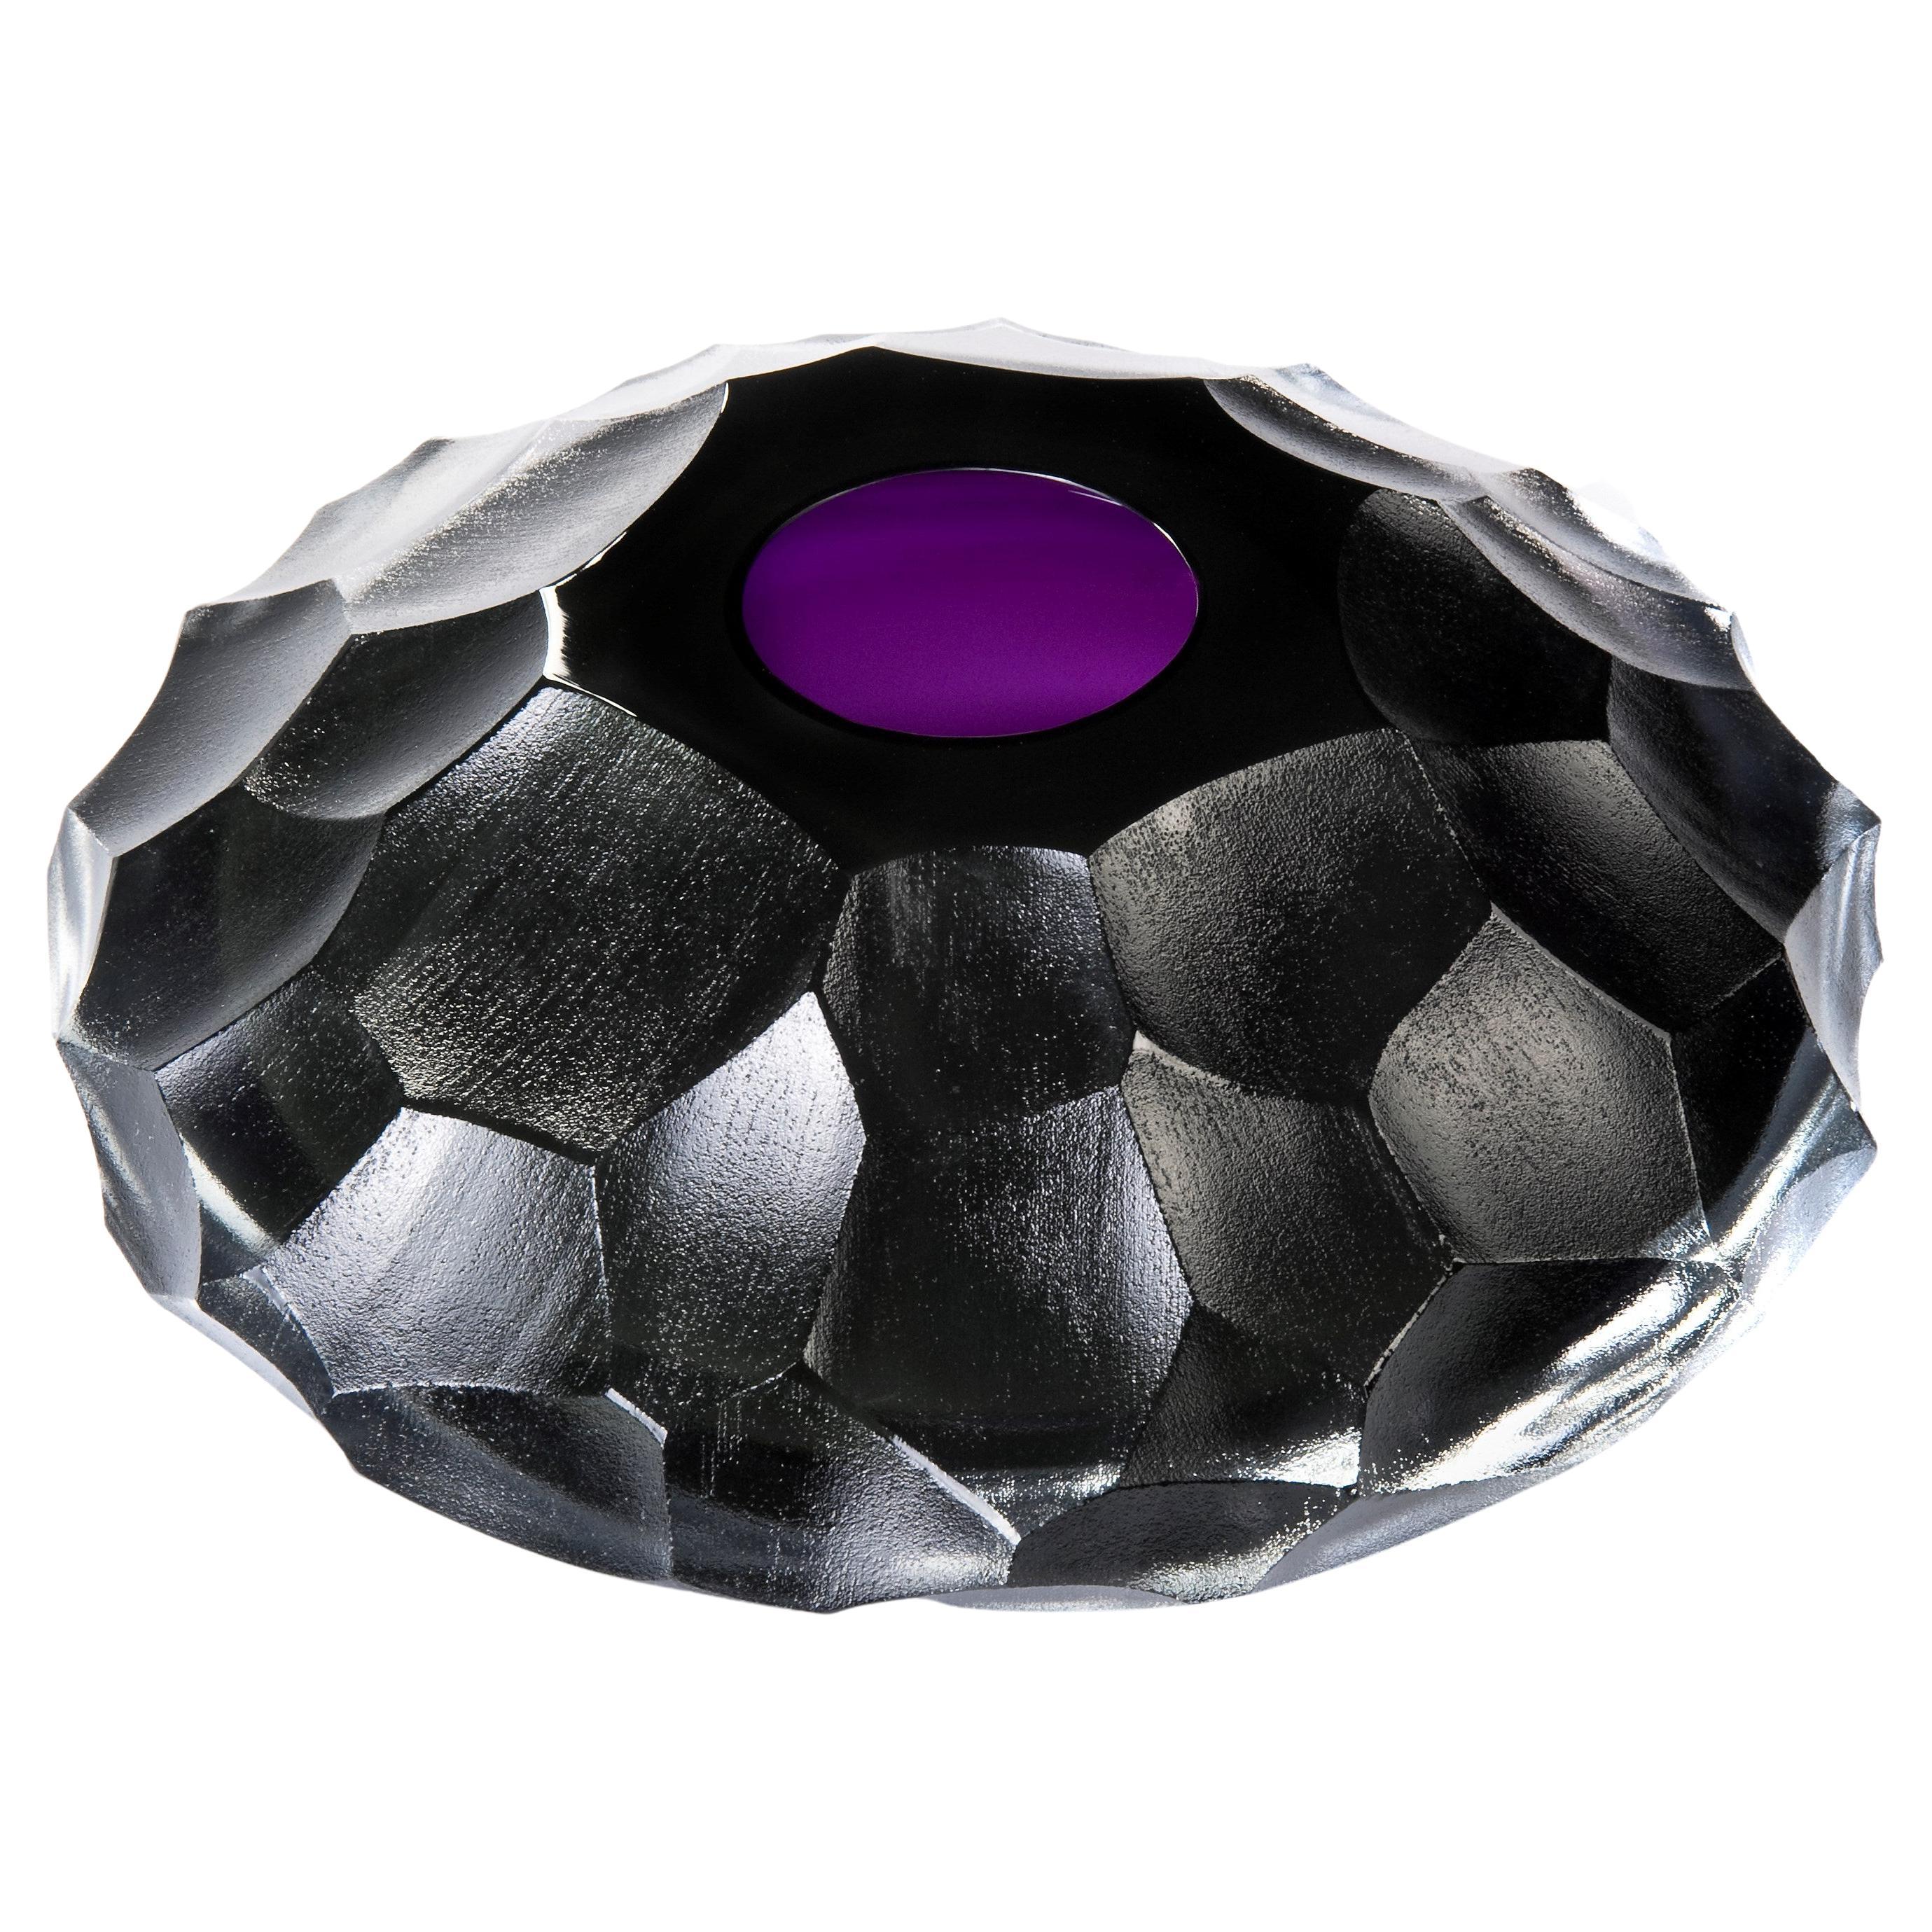  Turtle Jewel, a faceted cut purple glass centrepiece / vase by  Lena Bergström For Sale